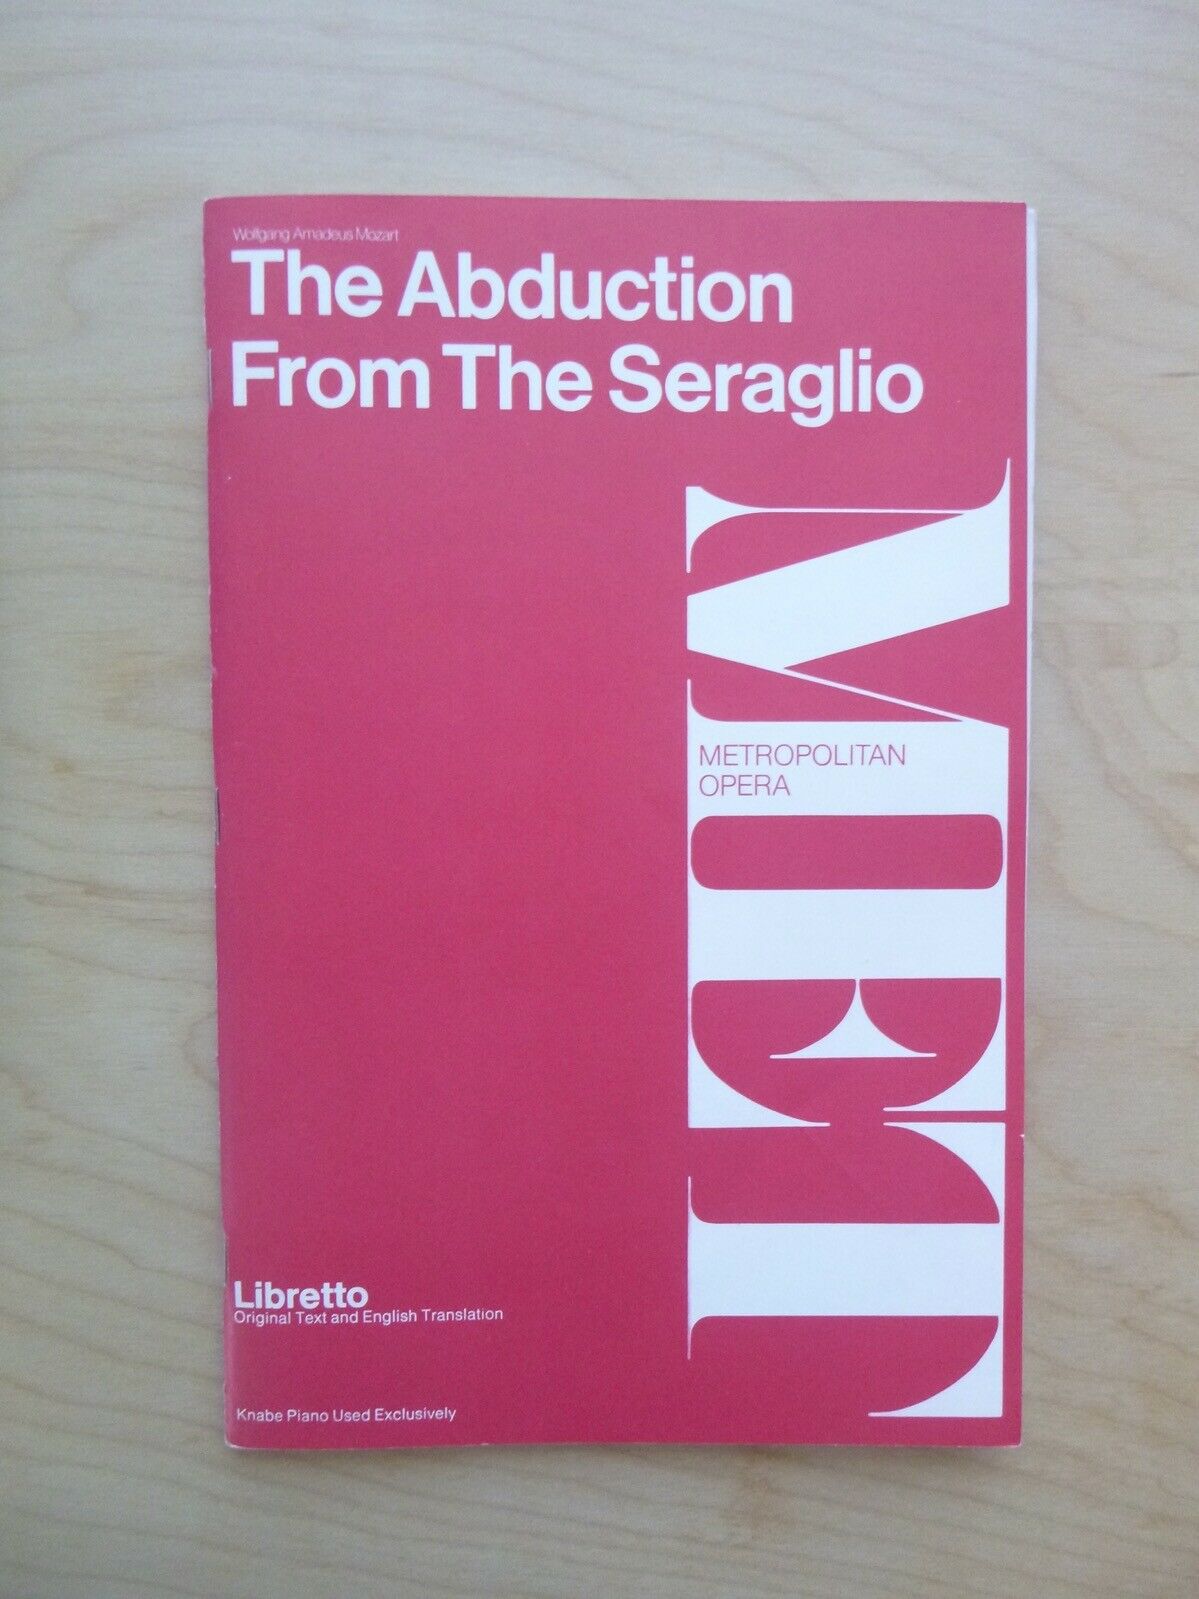 The Abduction From The Seraglio: Mozart & The Metropolitan Opera, Schirmer, 1962